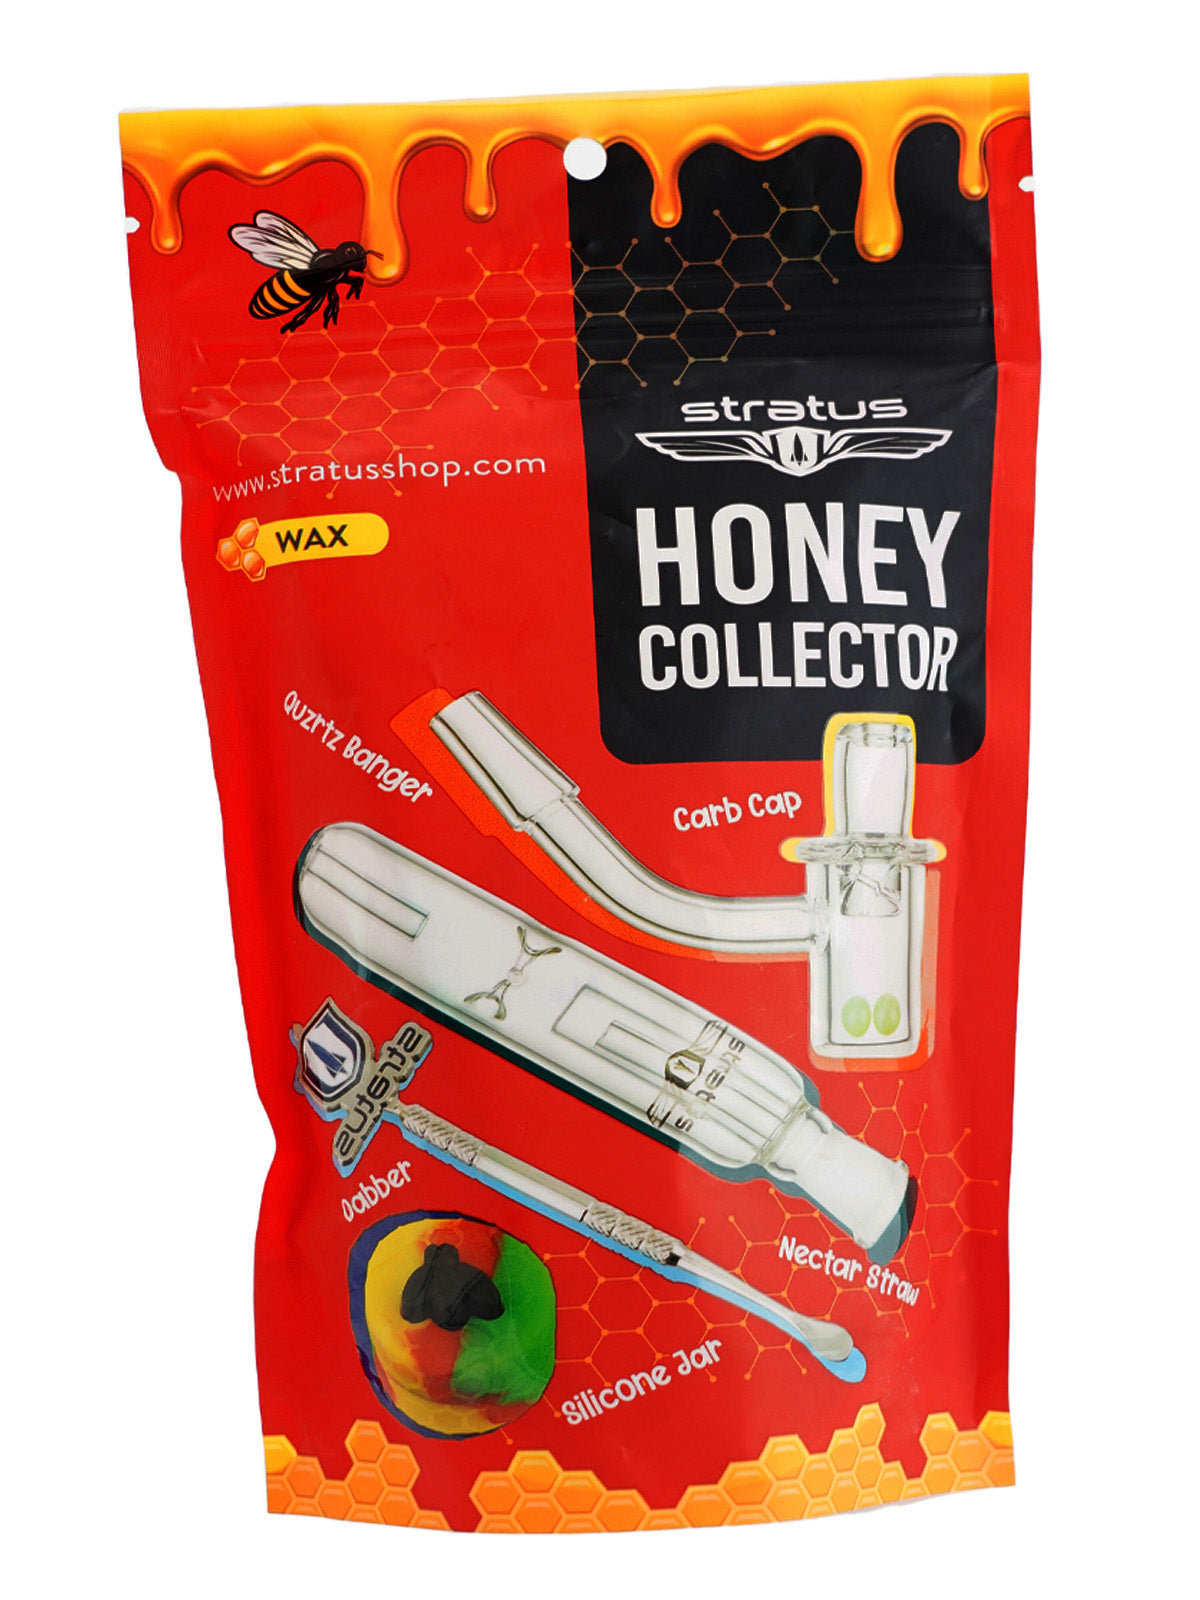 Stratus " Honey Collector" Kit